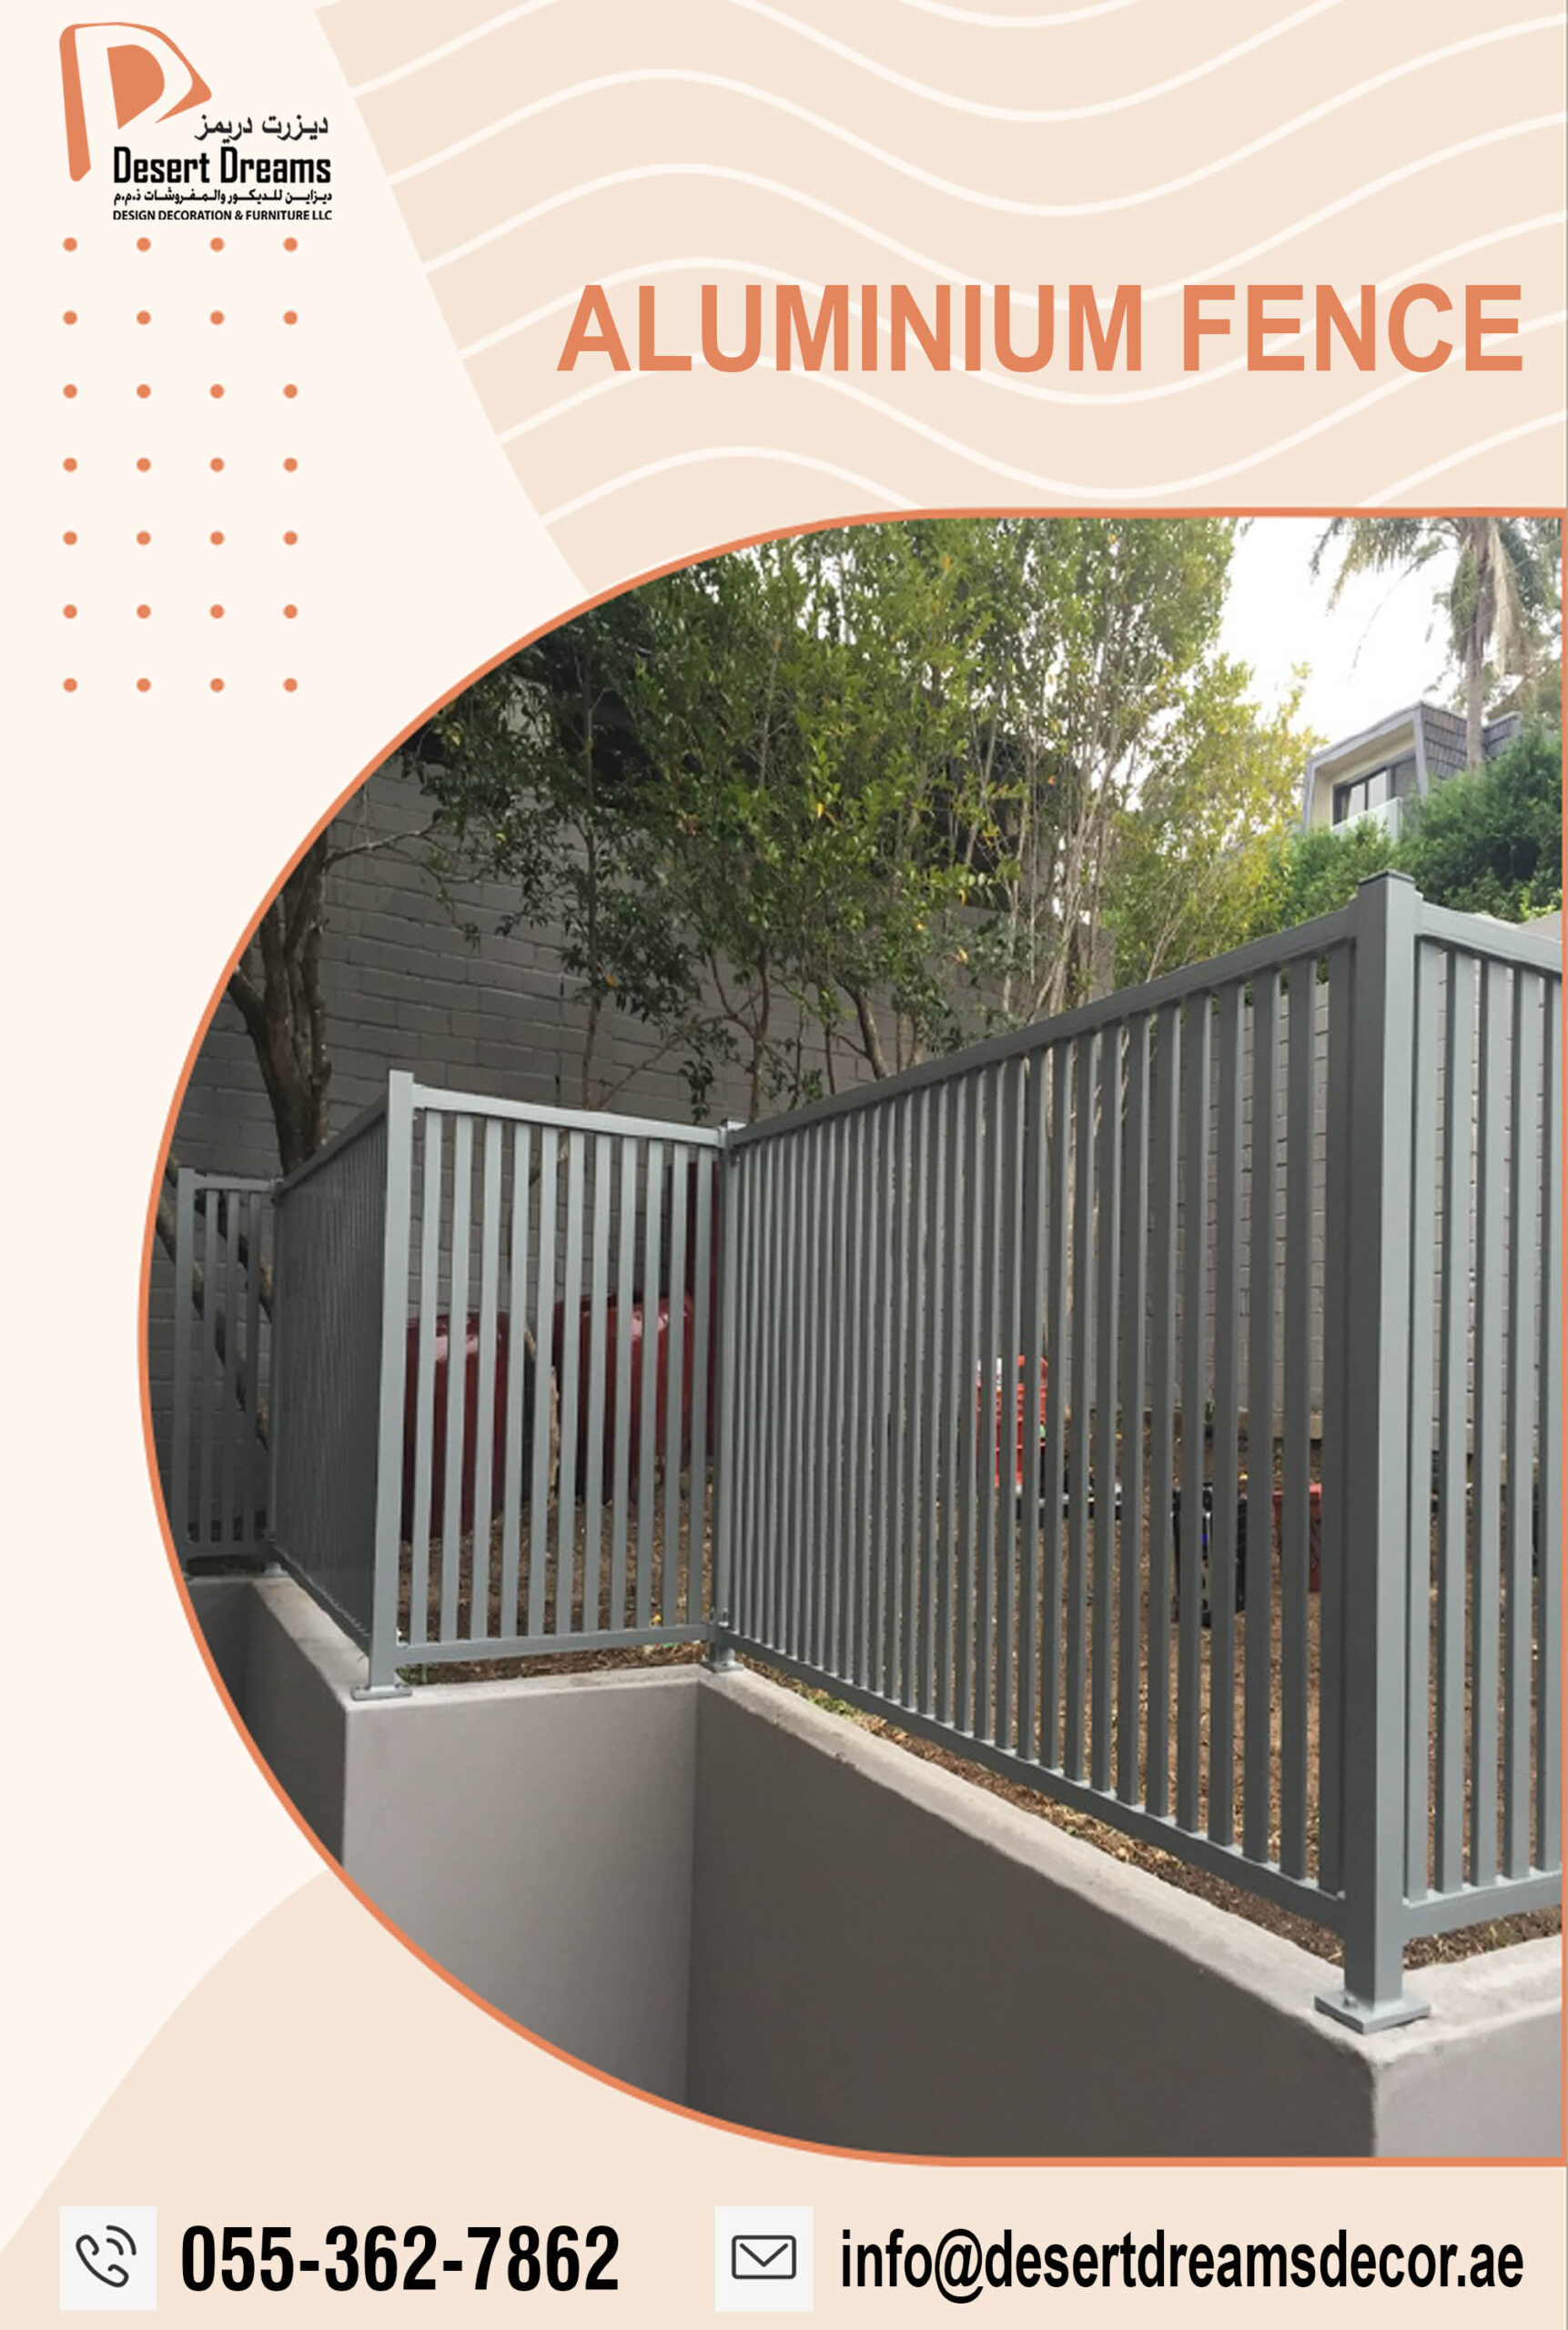 Aluminium fence dubai, aluminium fence uae, aluminium fence abu dhabi (2).jpg